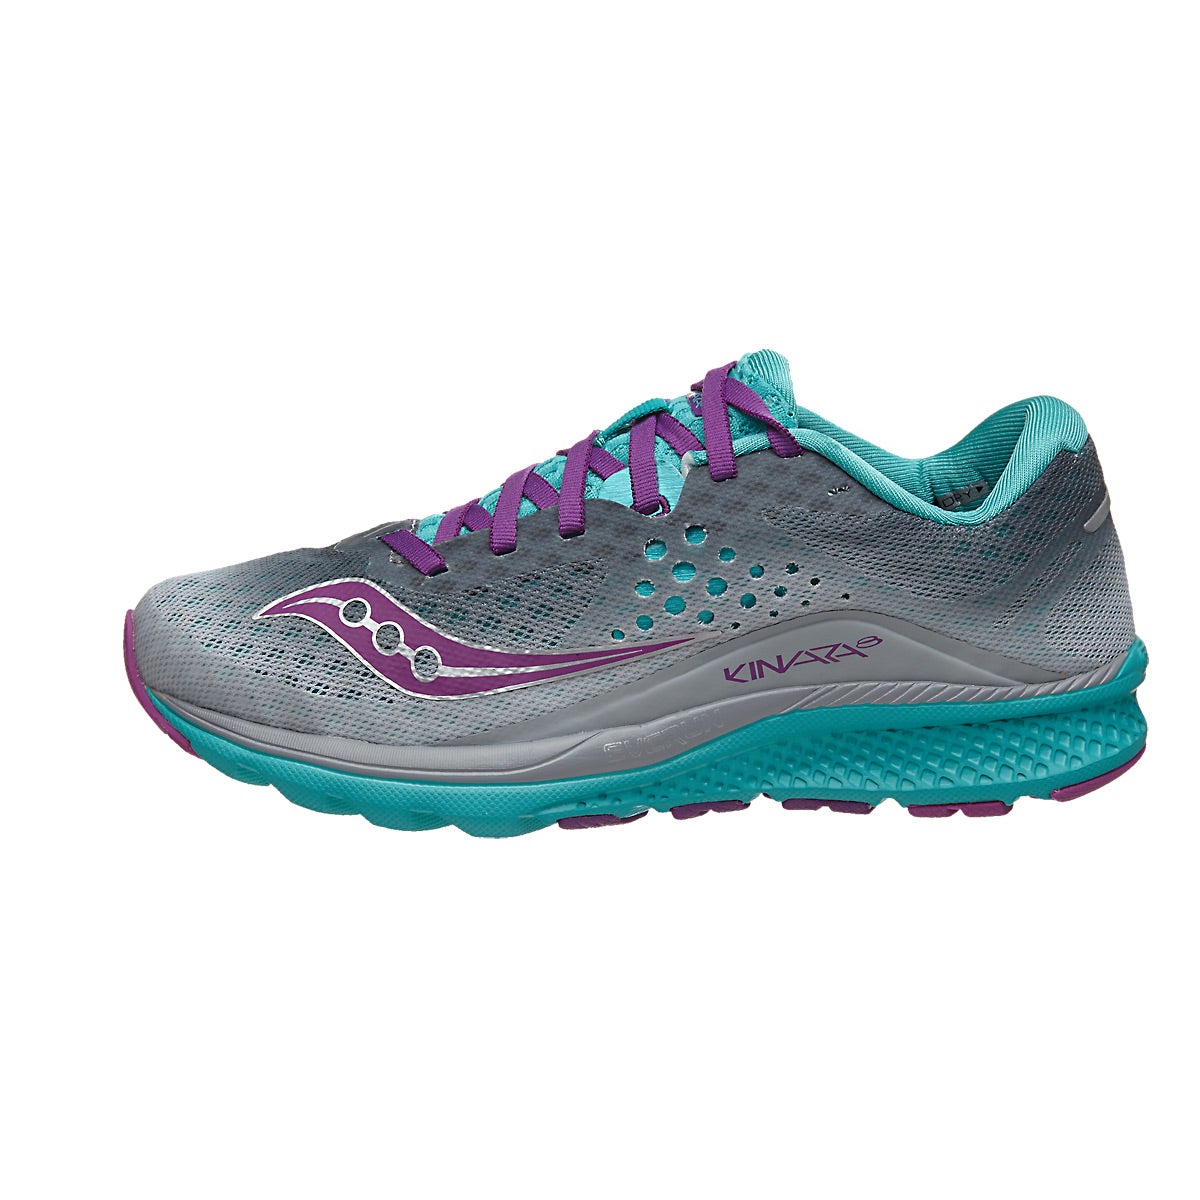 Saucony Kinvara 8 Women's Shoes Grey/Teal/Purple 360° View | Running ...